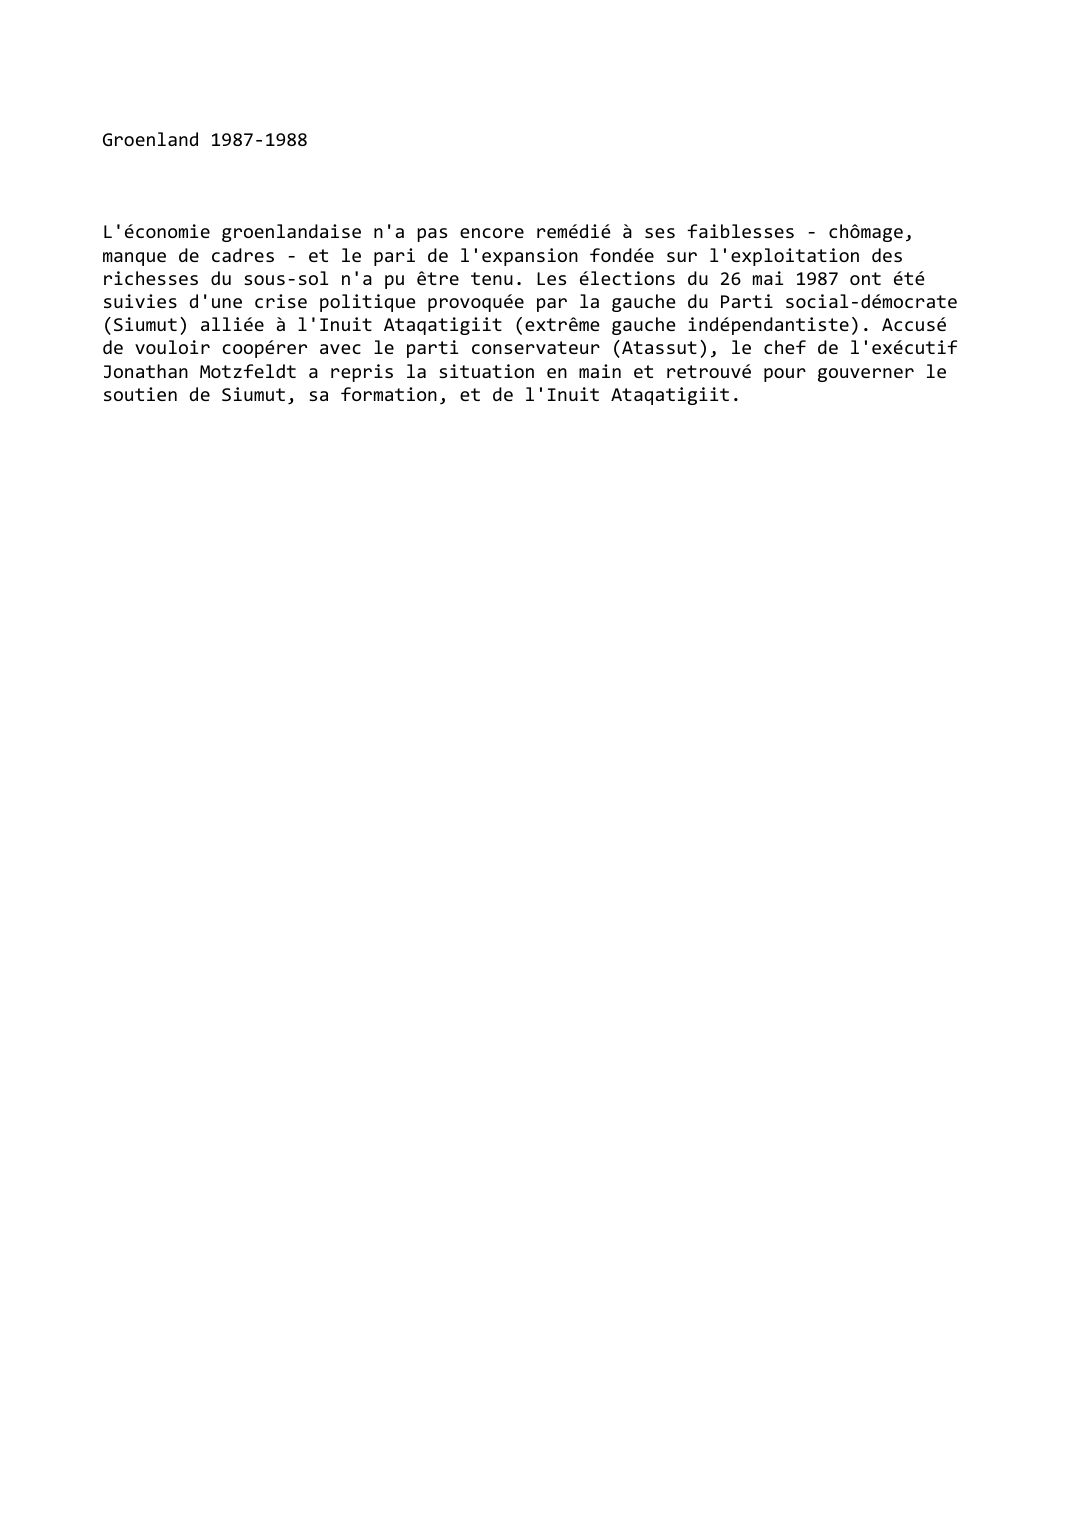 Prévisualisation du document Groenland (1987-1988)